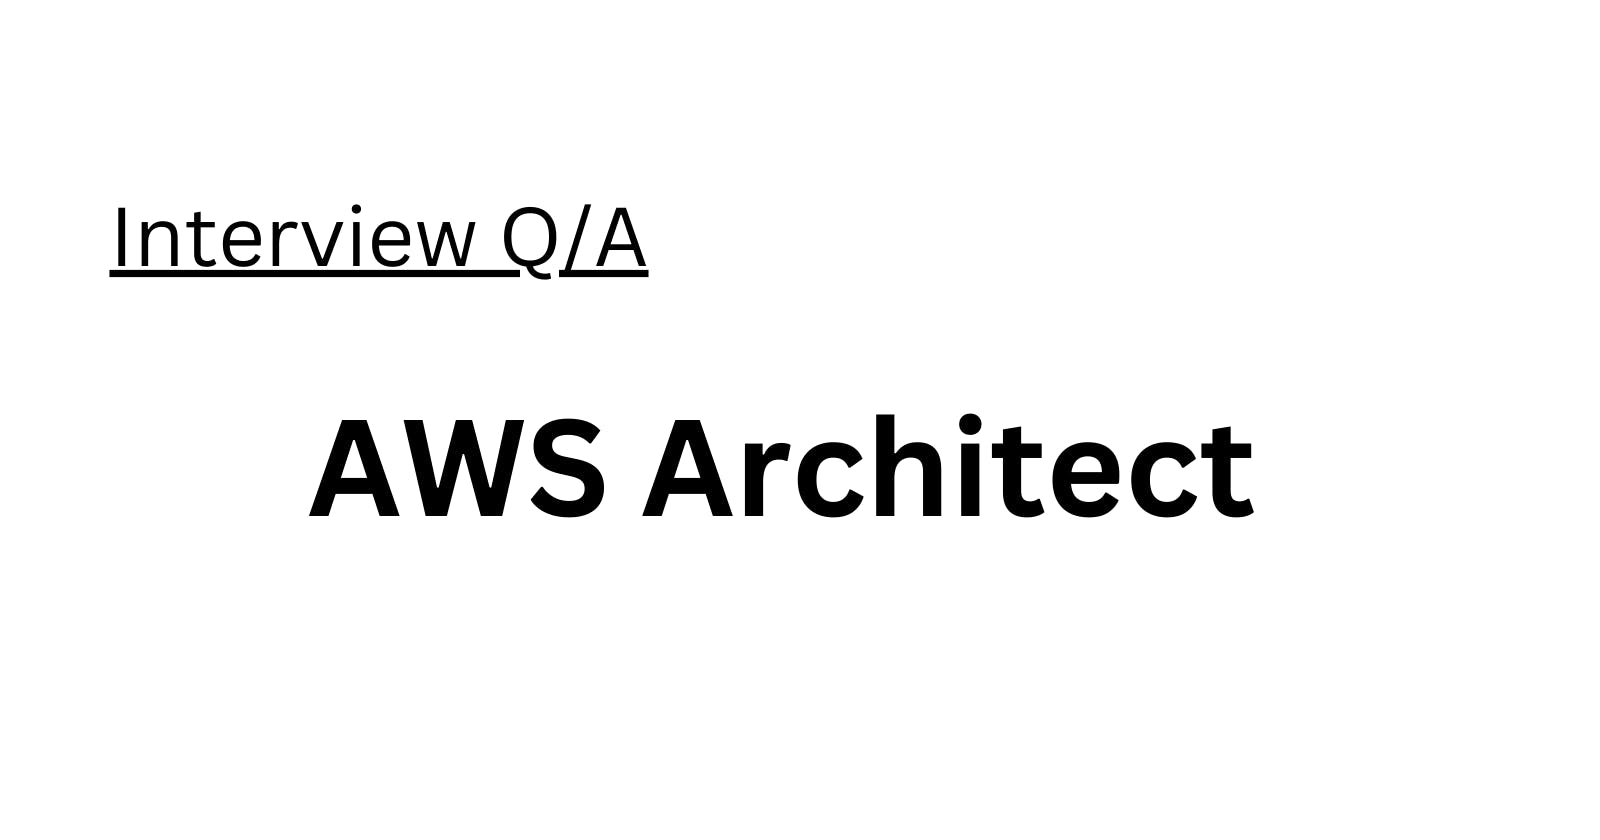 AWS Architect Interview Q/A